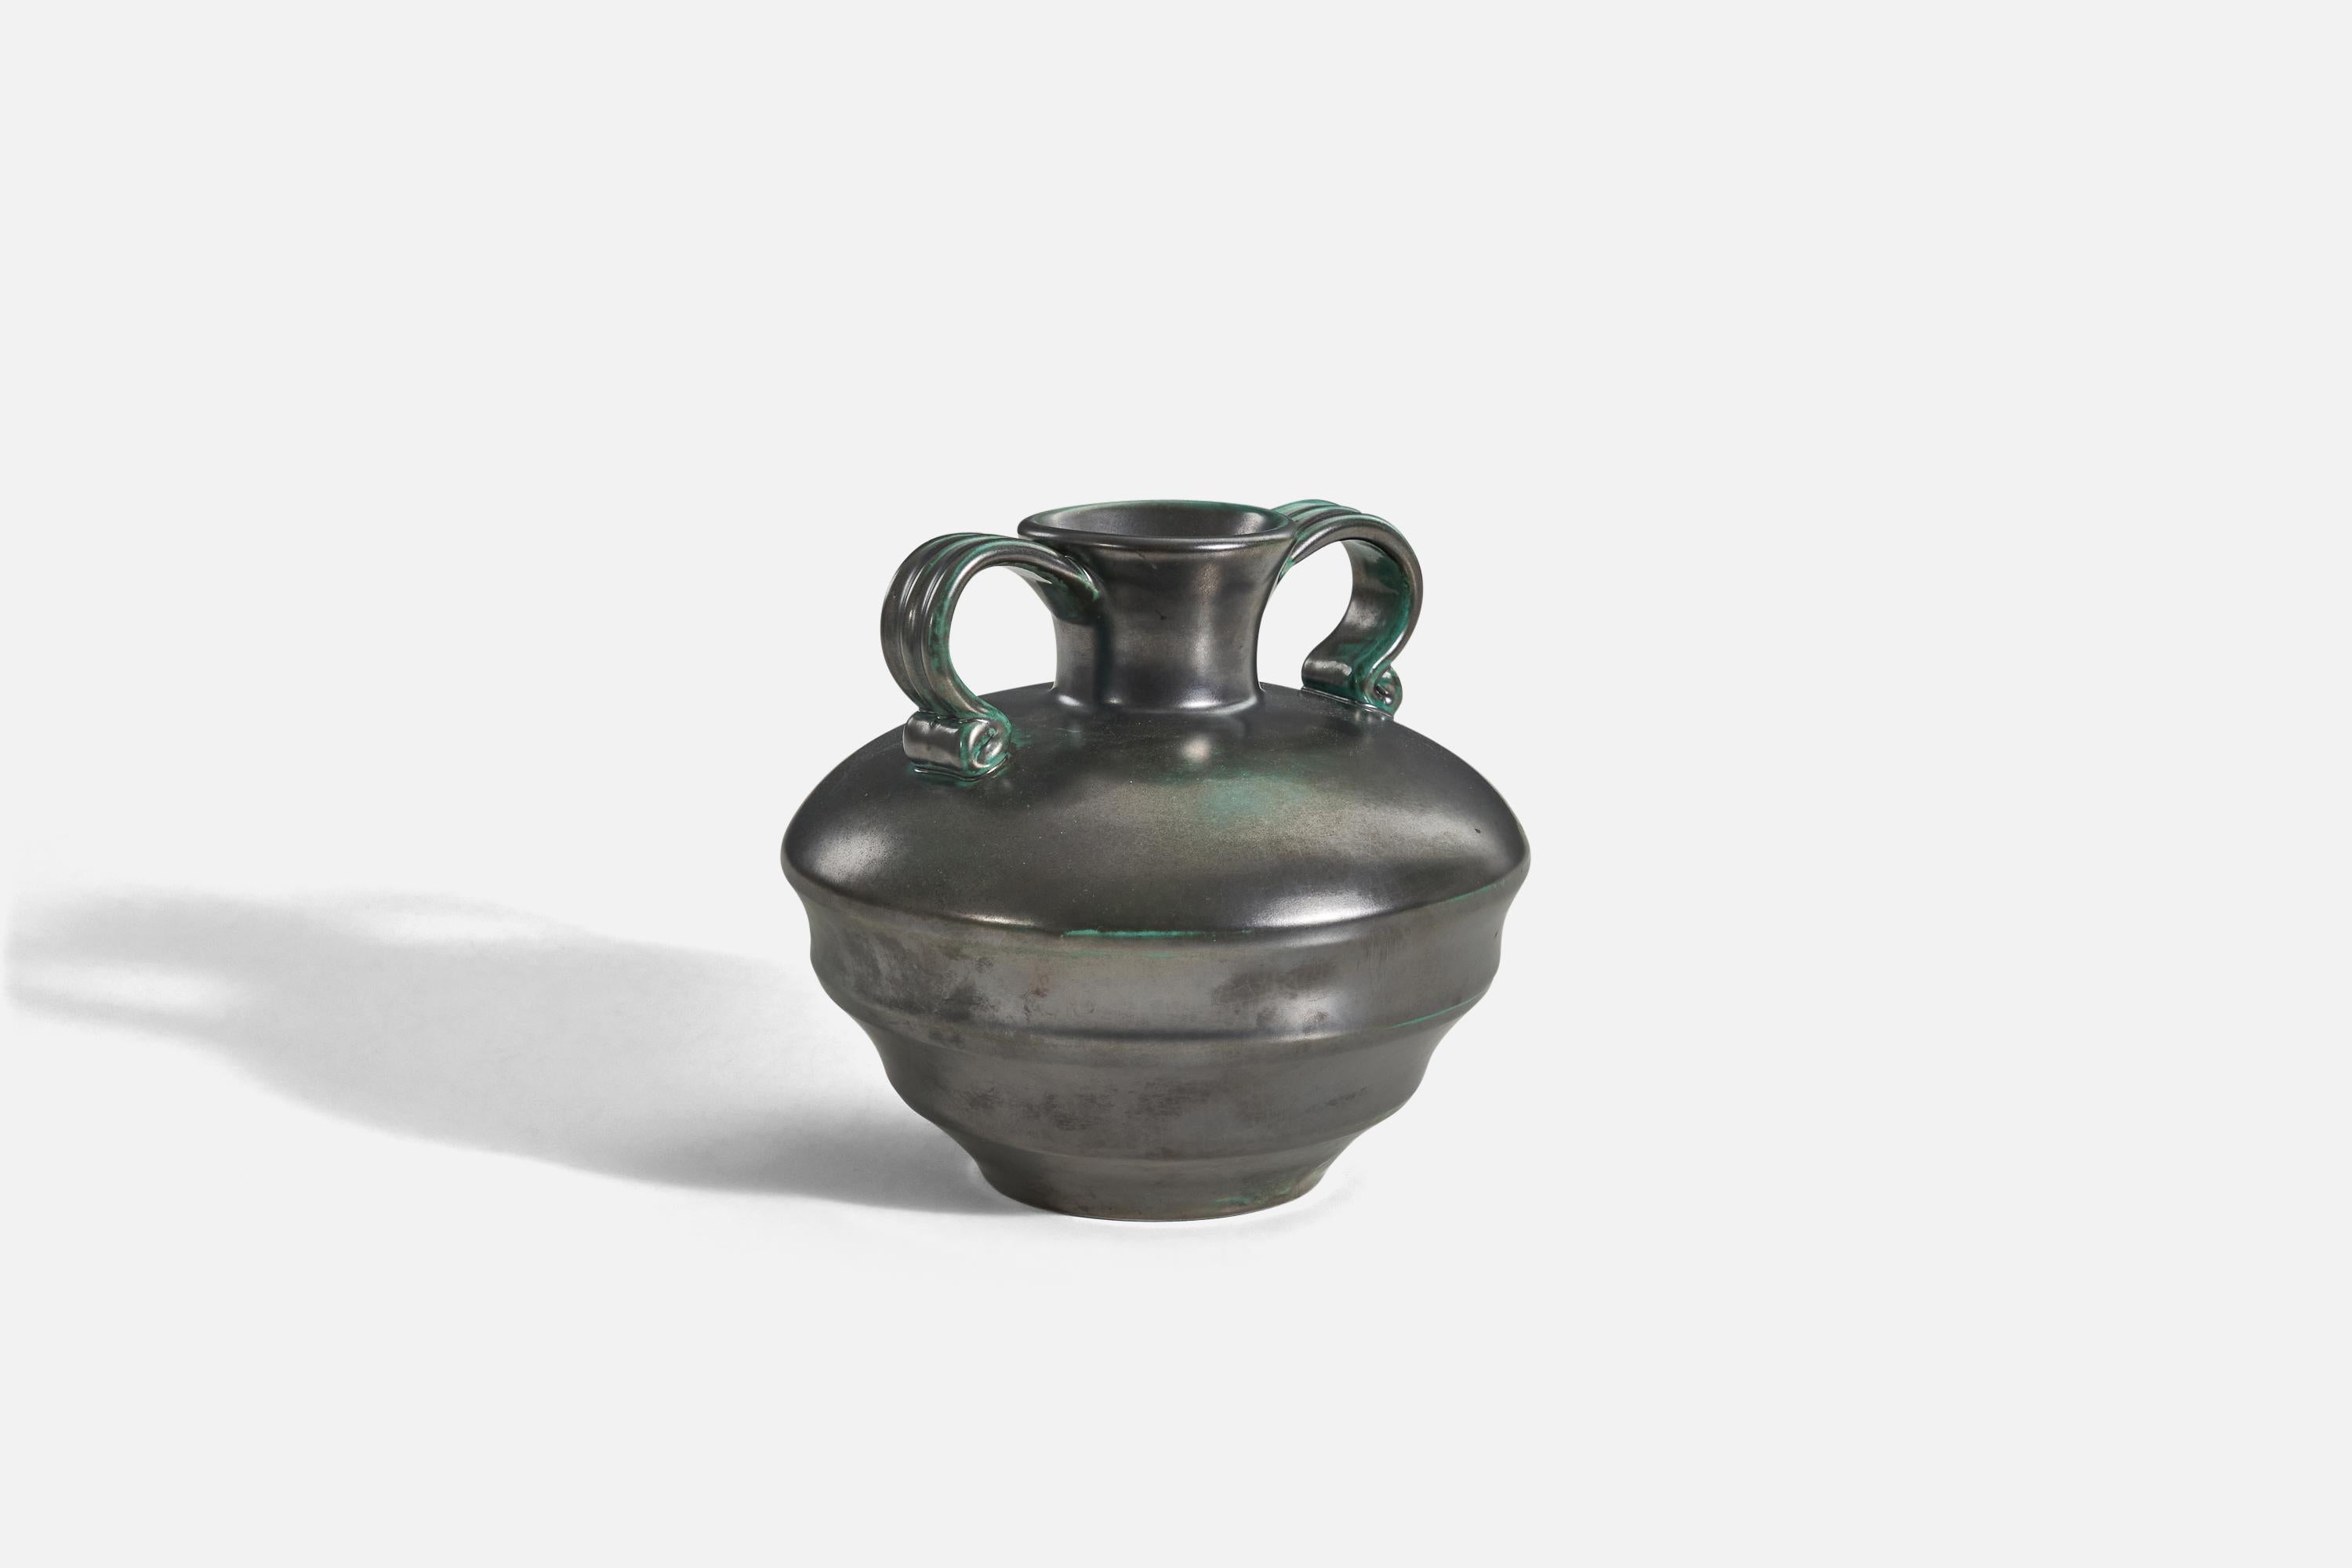 Scandinavian Modern Upsala-Ekeby, Vase, Black And Green-Glazed Earthenware, Sweden, 1940s For Sale